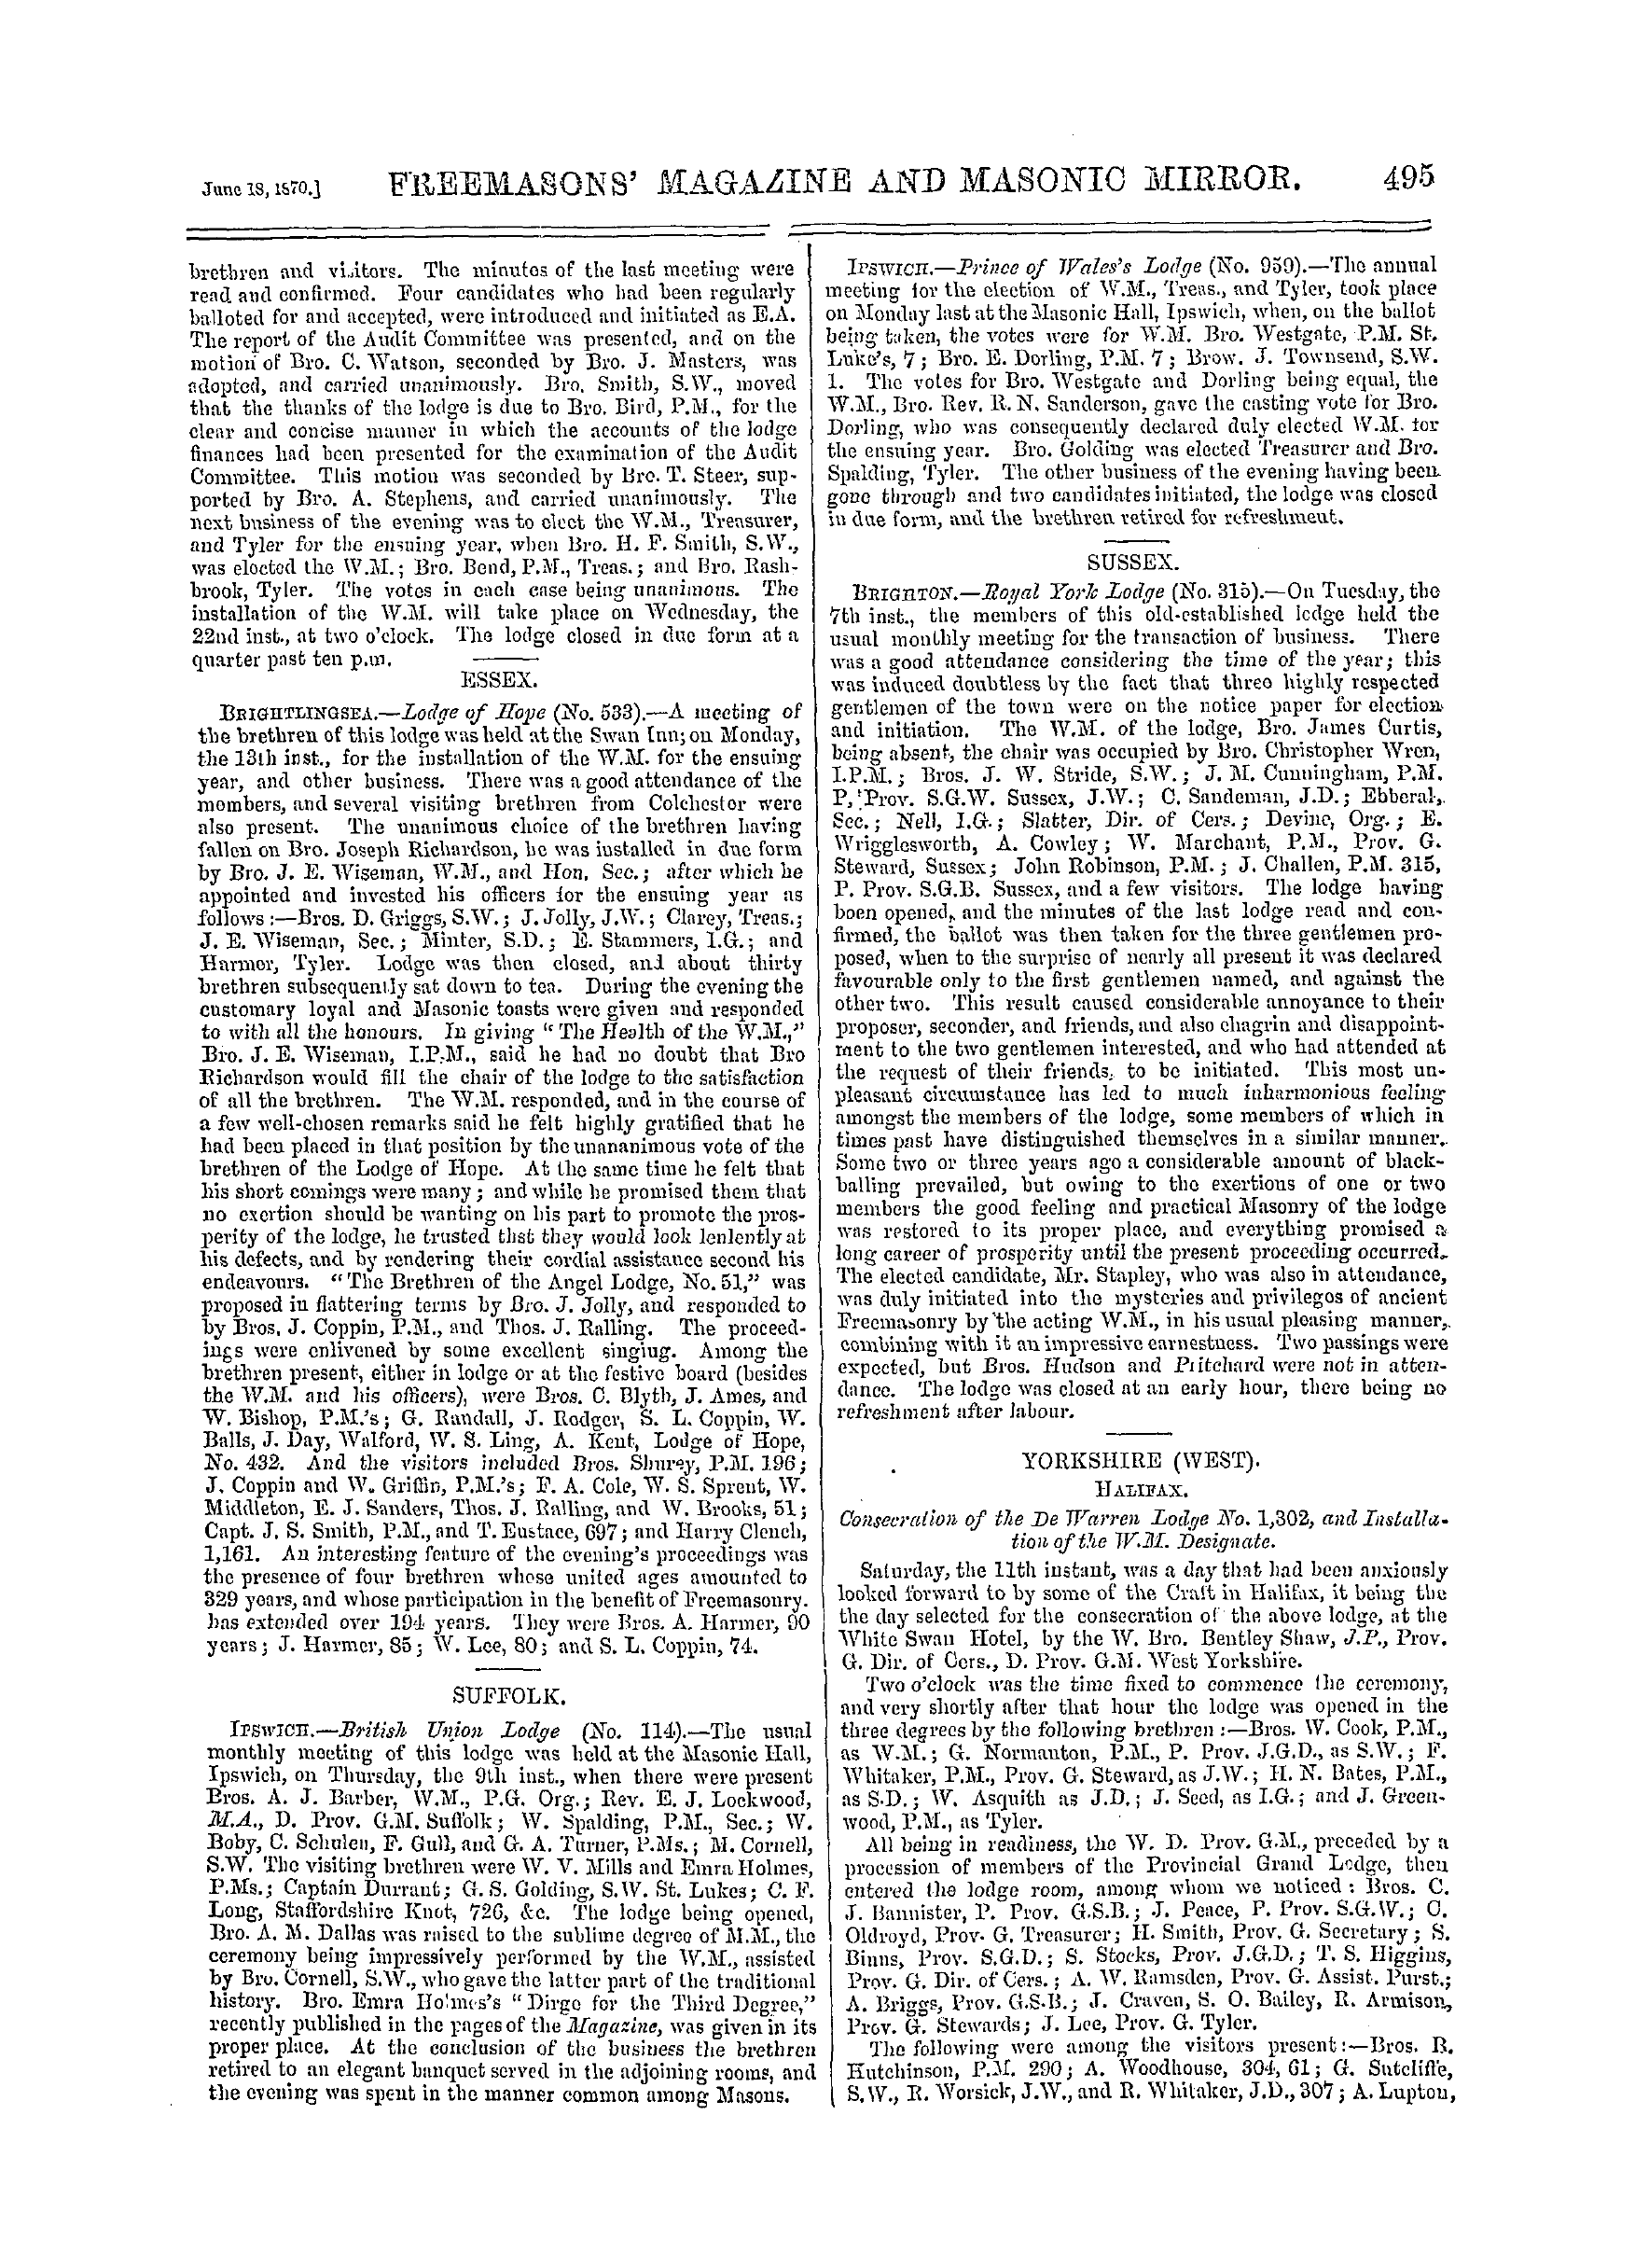 The Freemasons' Monthly Magazine: 1870-06-18 - Craft Masonry.